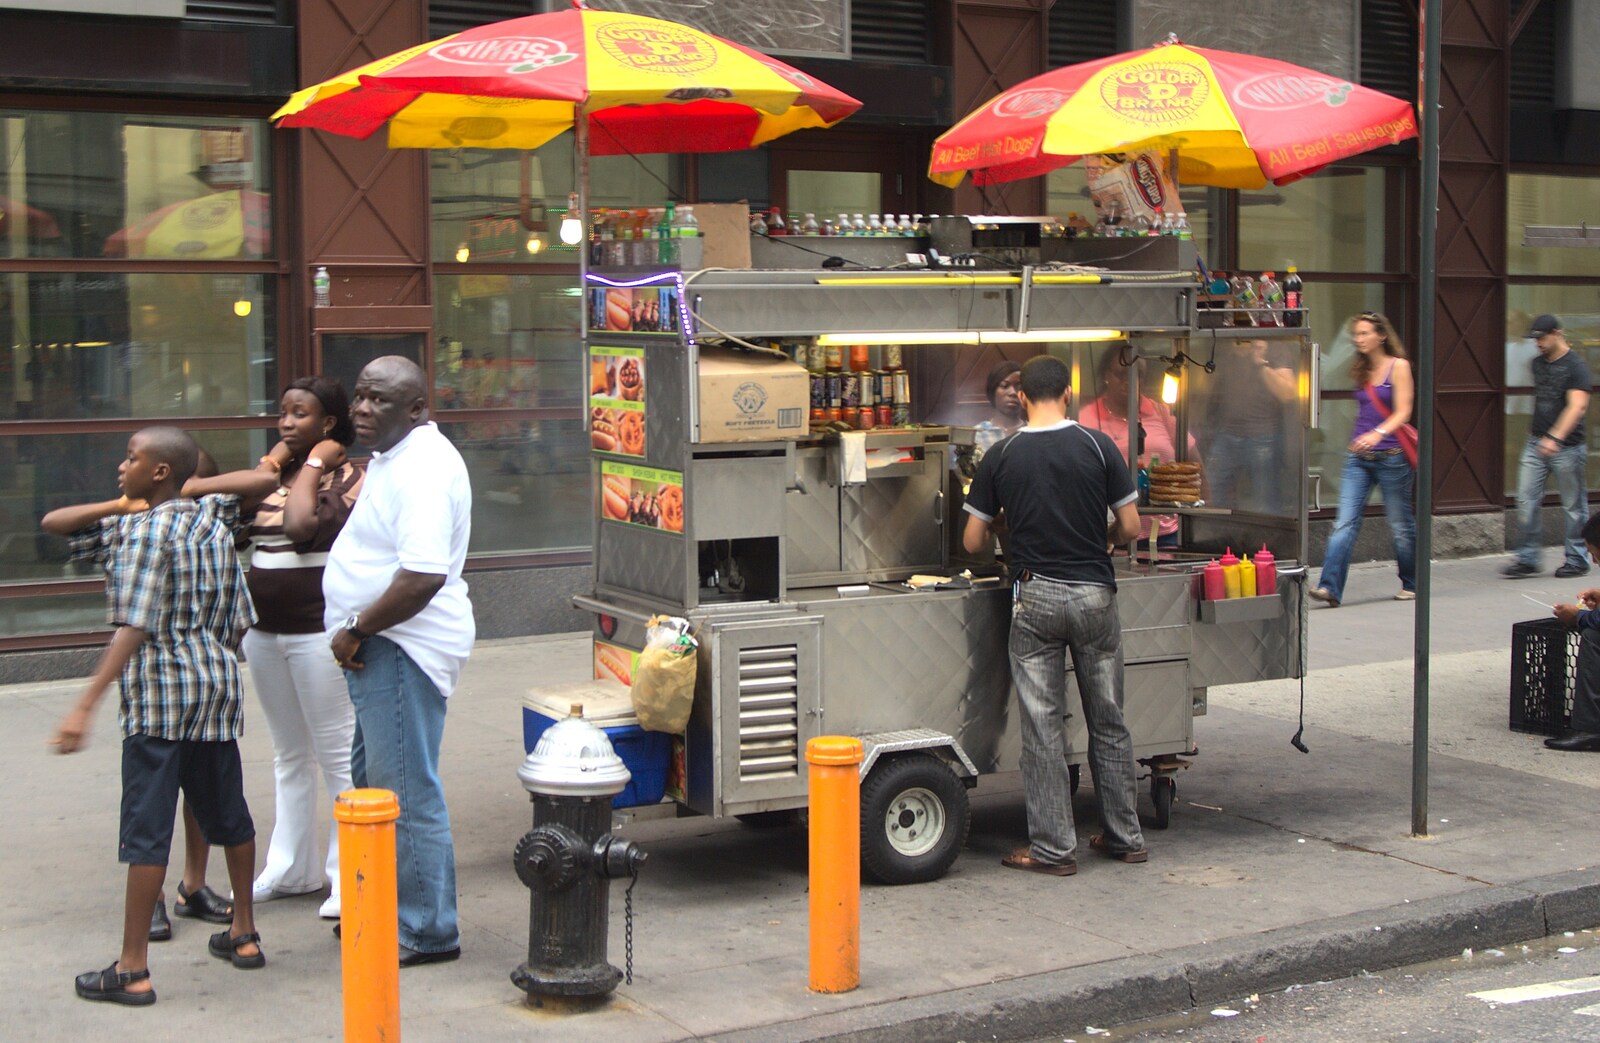 A hotdog stand near Times Square from A Manhattan Hotdog, New York, USA - 21st August 2011